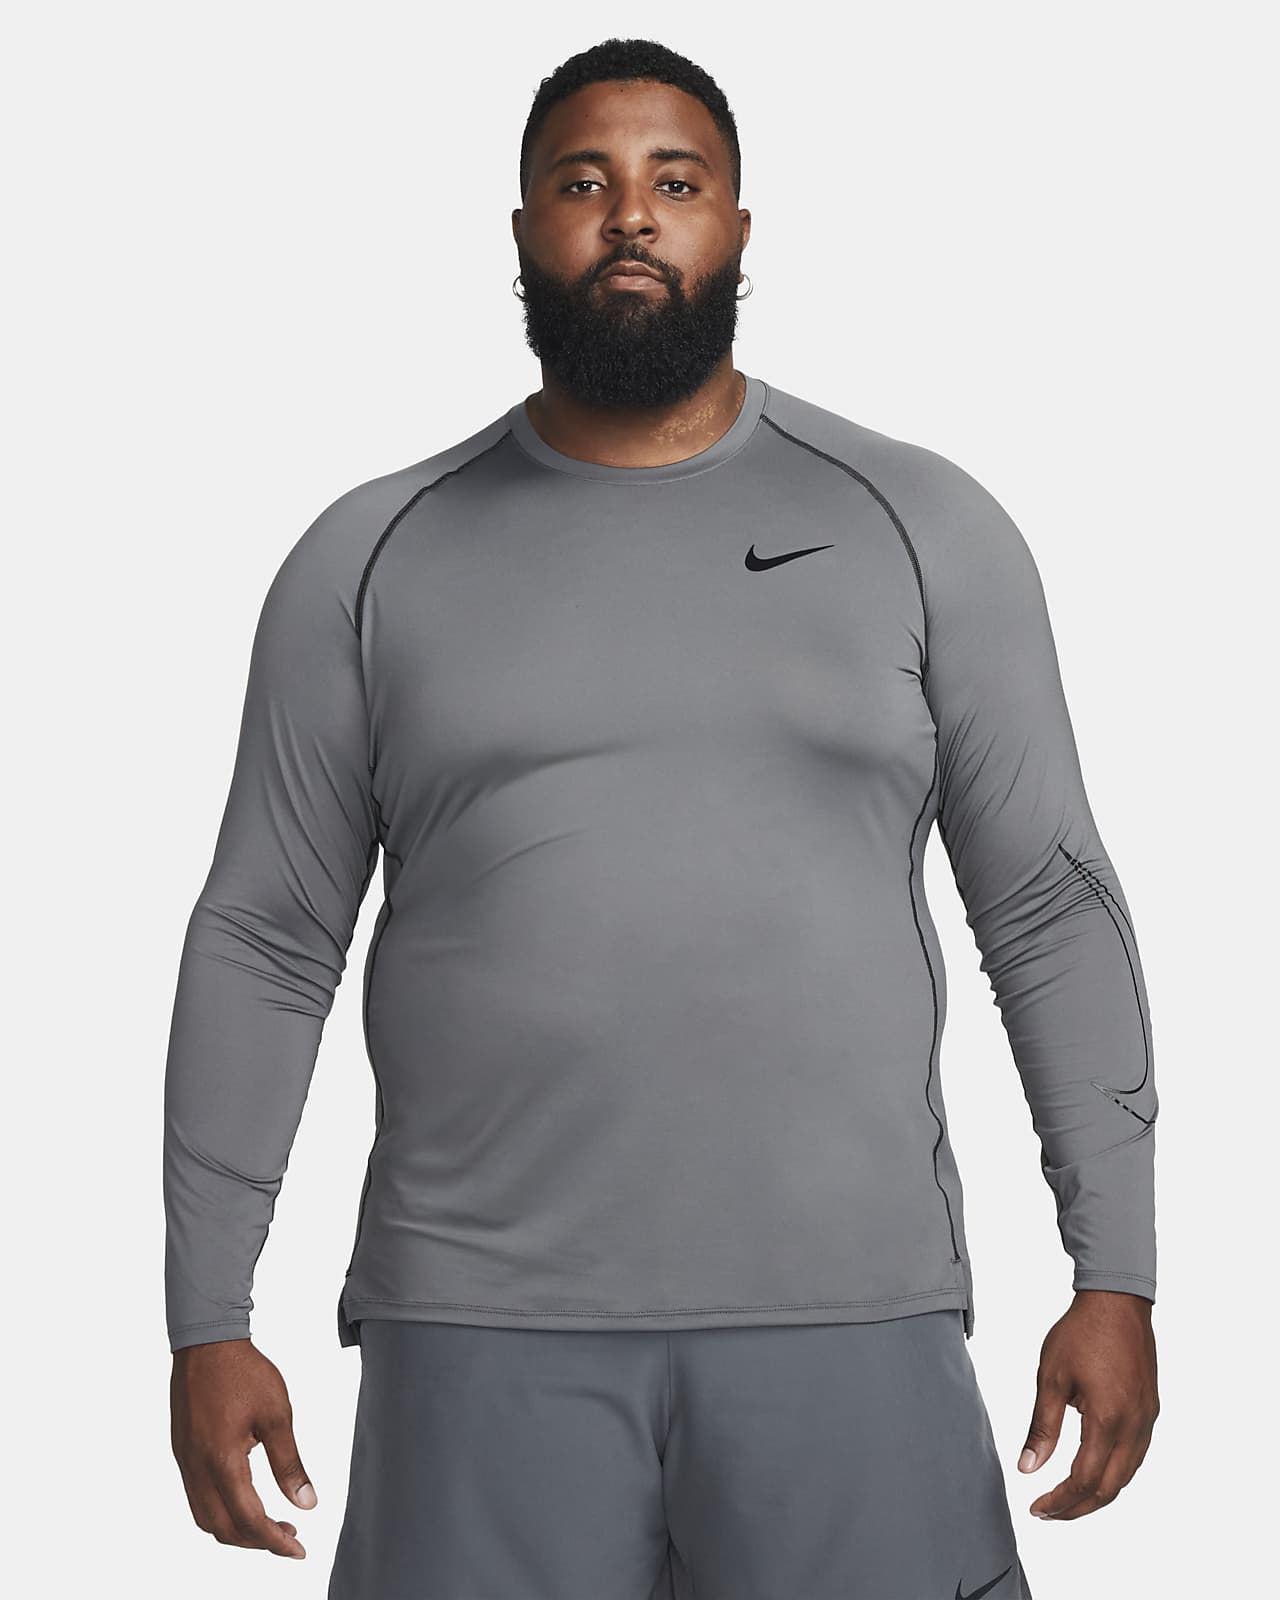 Papa Publicatie twee Nike Pro Dri-FIT Men's Slim Fit Long-Sleeve Top. Nike.com